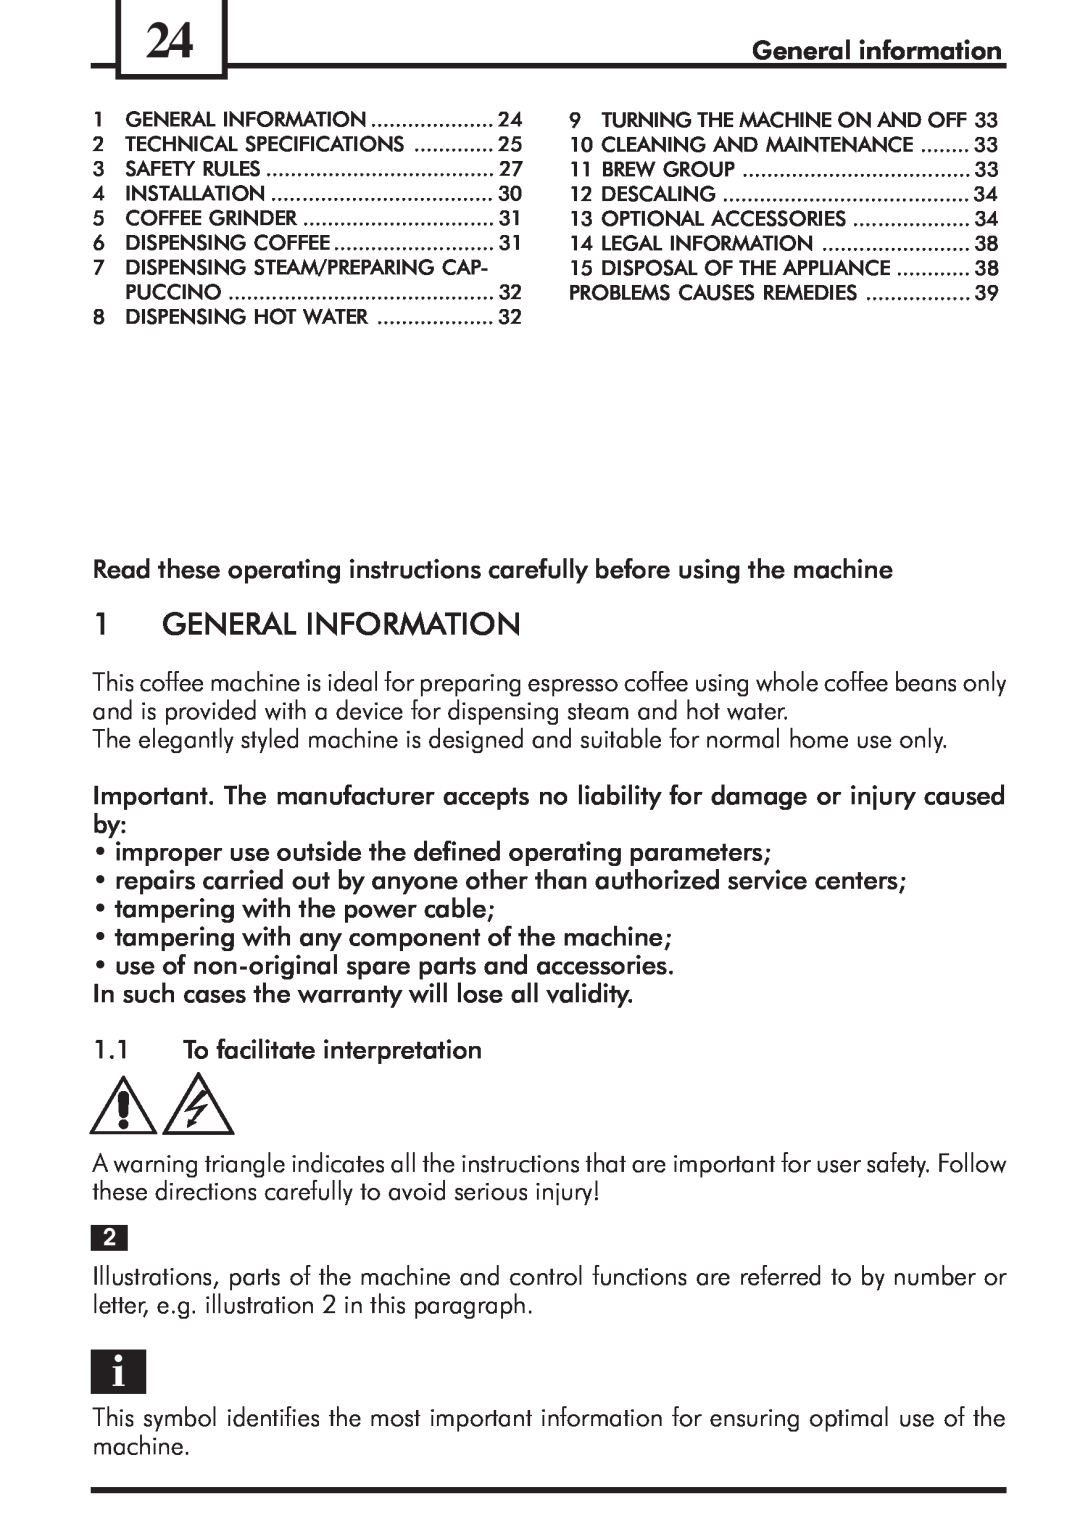 Saeco Coffee Makers VIENNADELUXE manual 1GENERAL INFORMATION 